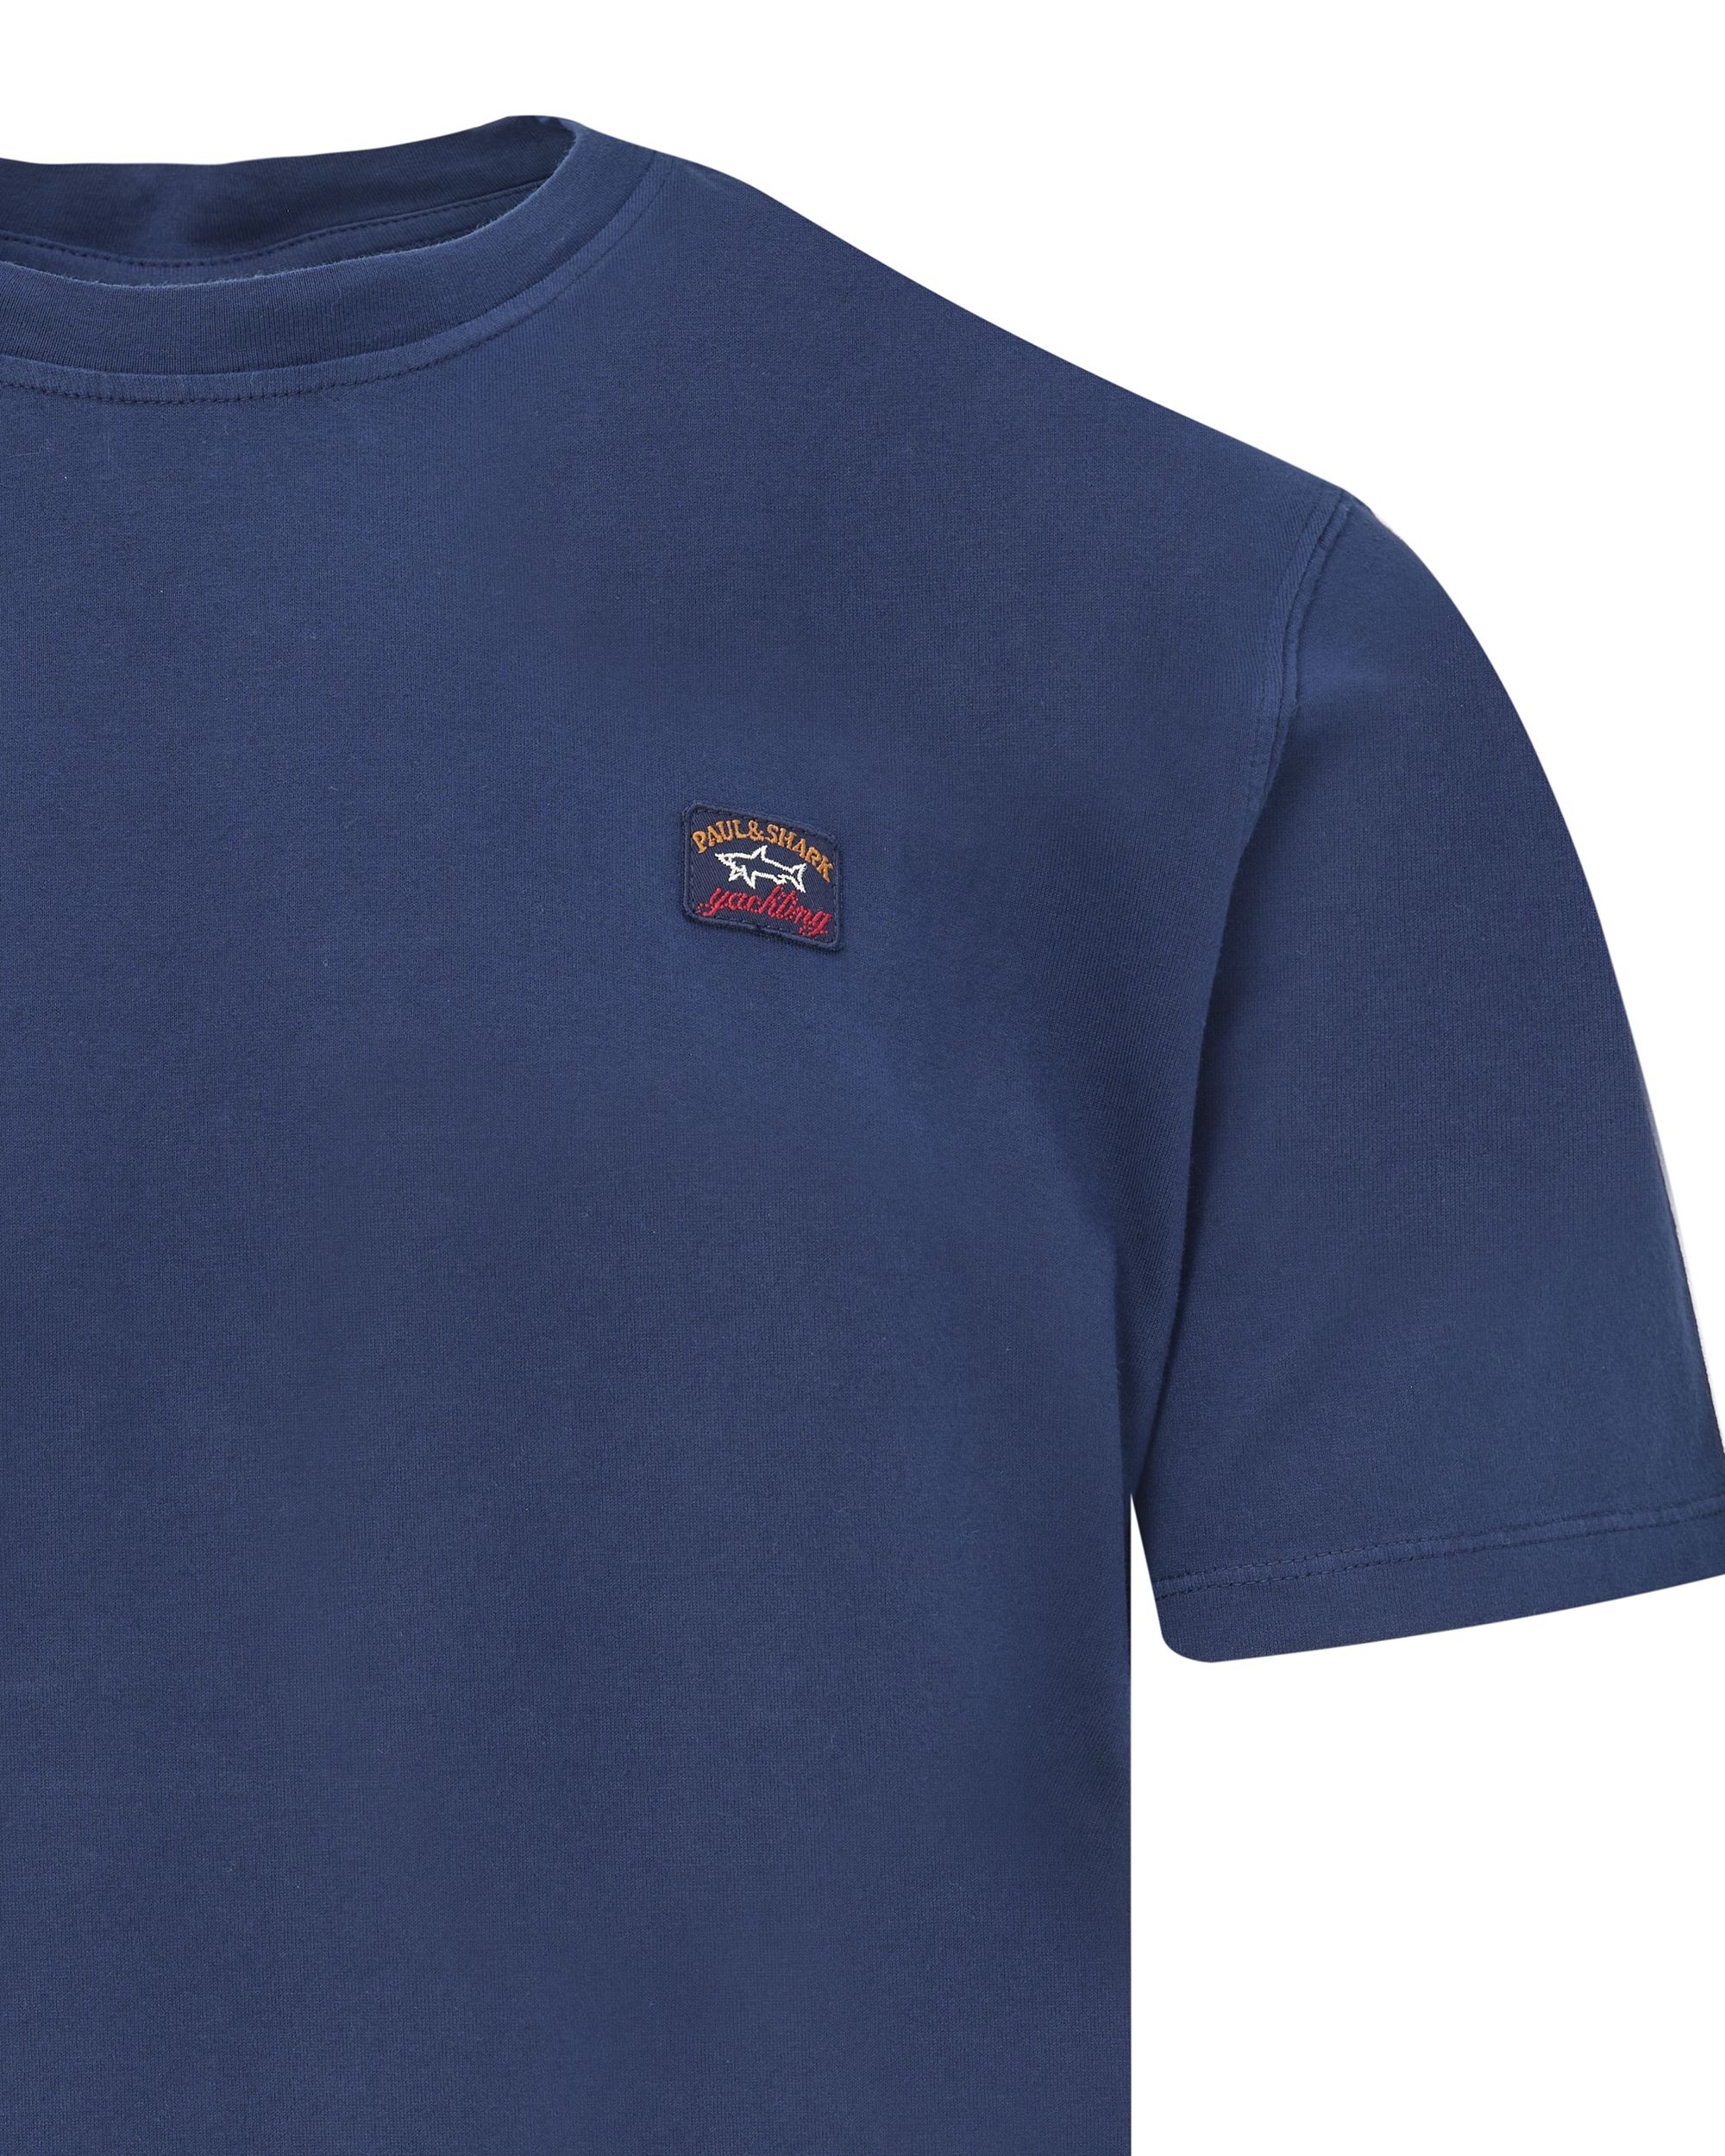 Paul & Shark T-shirt KM Donker blauw 083348-001-L